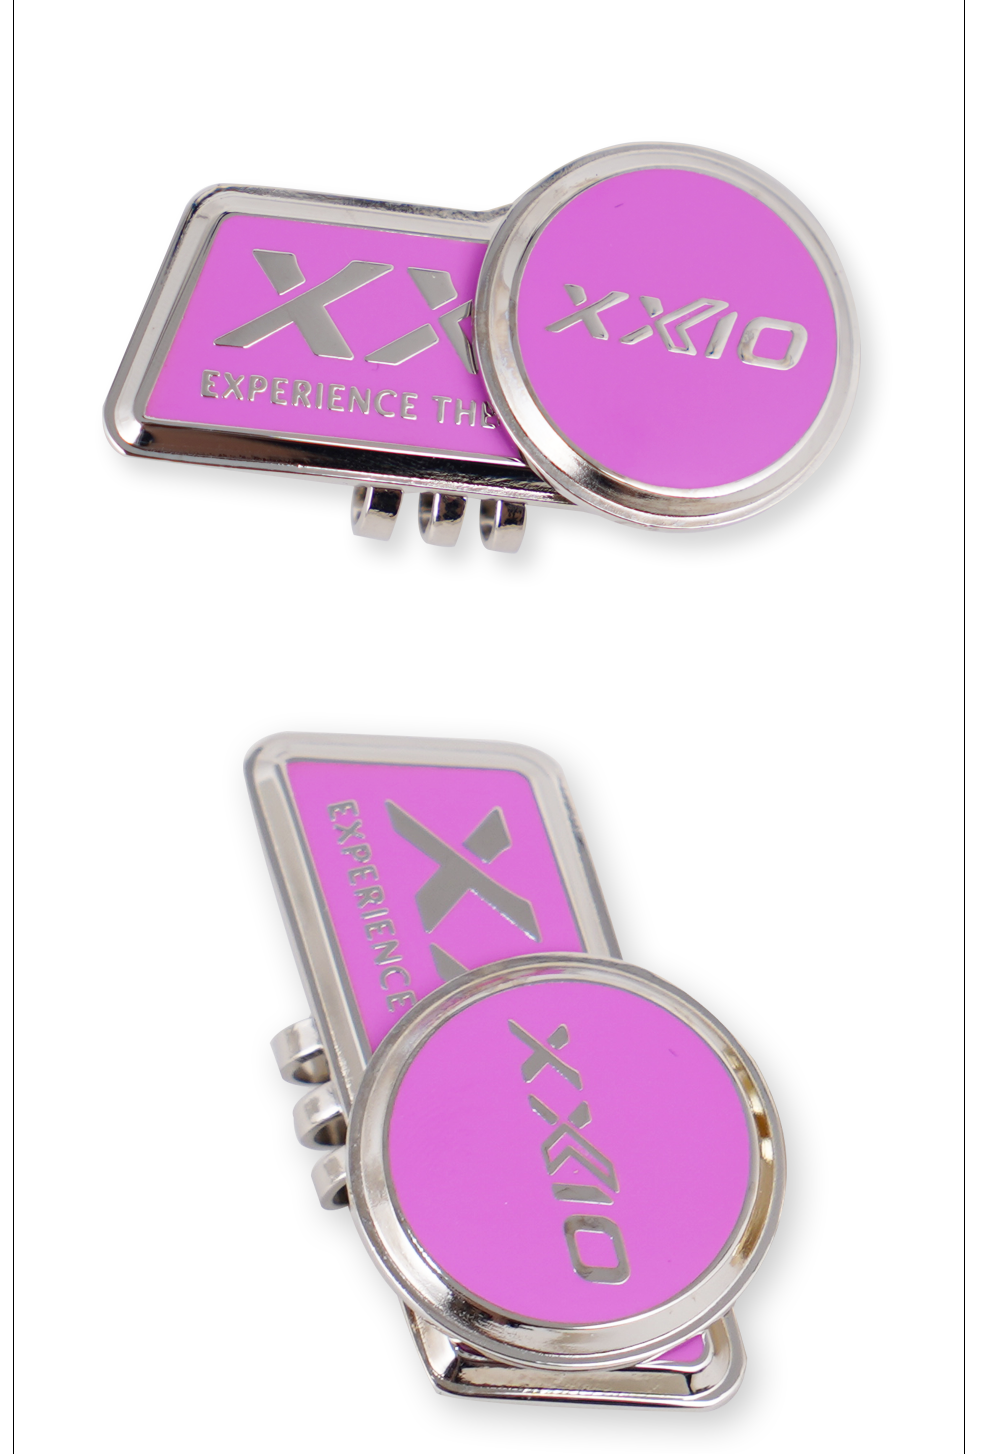 XXIOXX10高尔夫配件20款高品质帽夹MARK四色